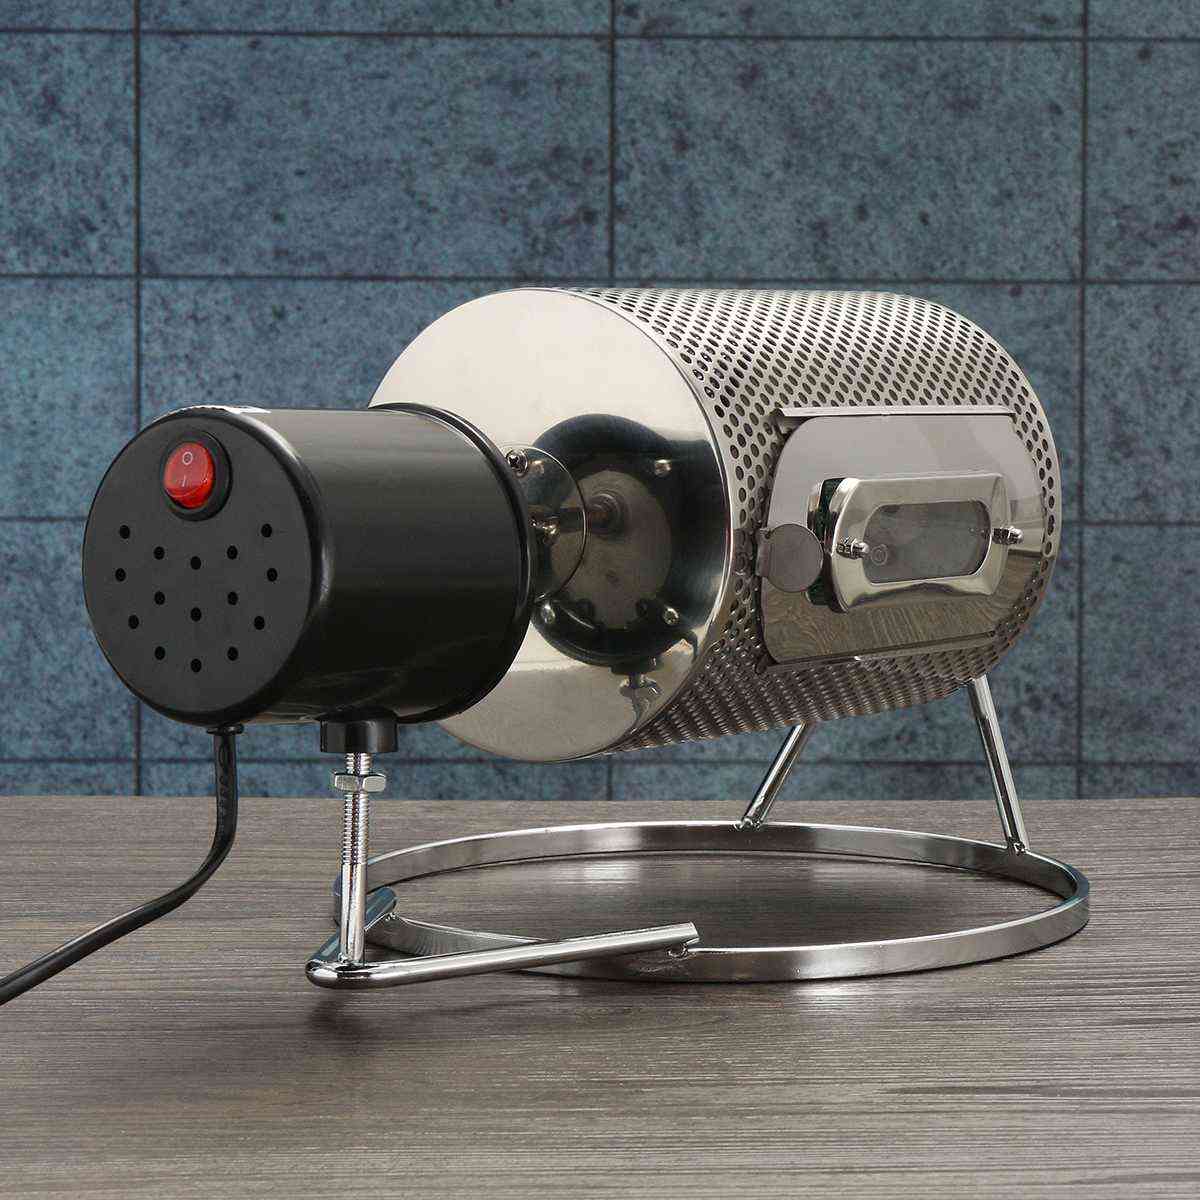 Electric Coffee Roasting Baking Tools Machine, Household Grain Drying Nut Roasters